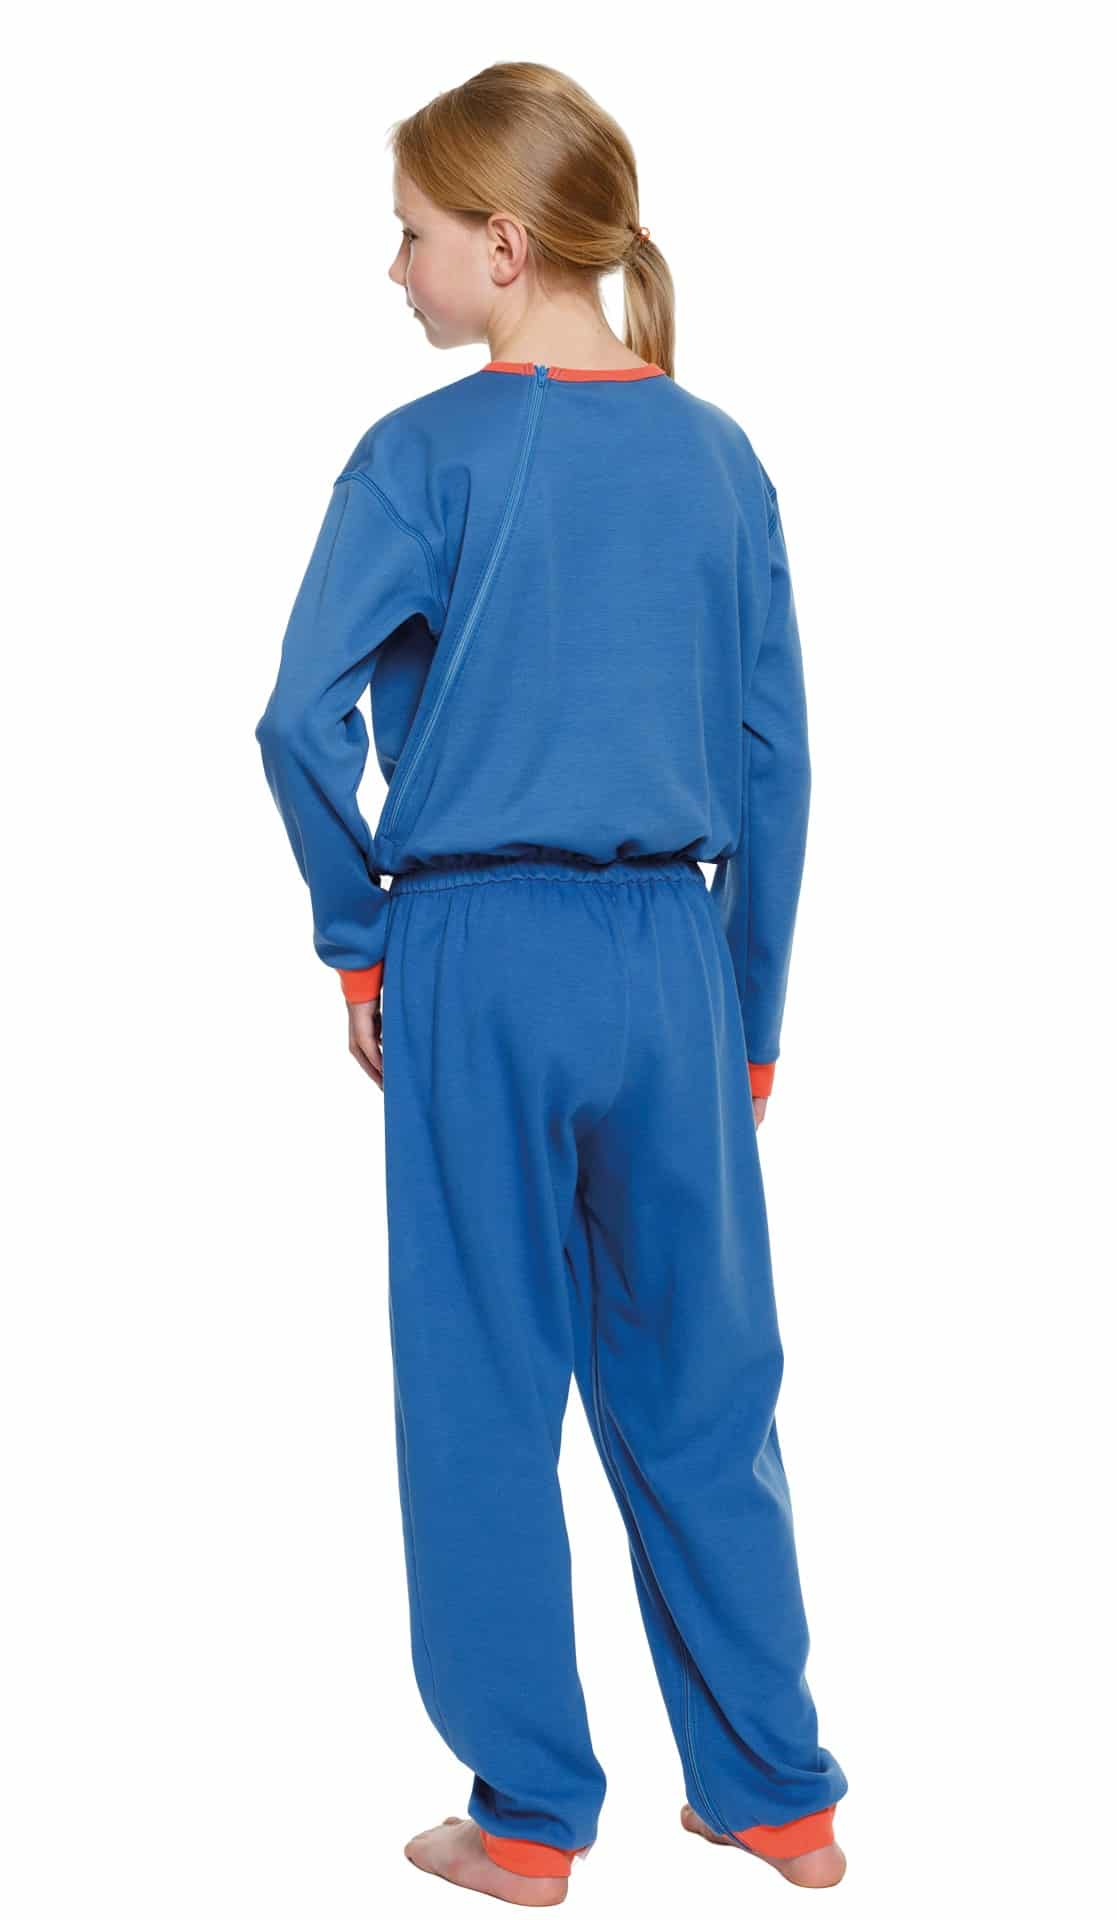 Suprima Pajamas Child Cobalt (047130)